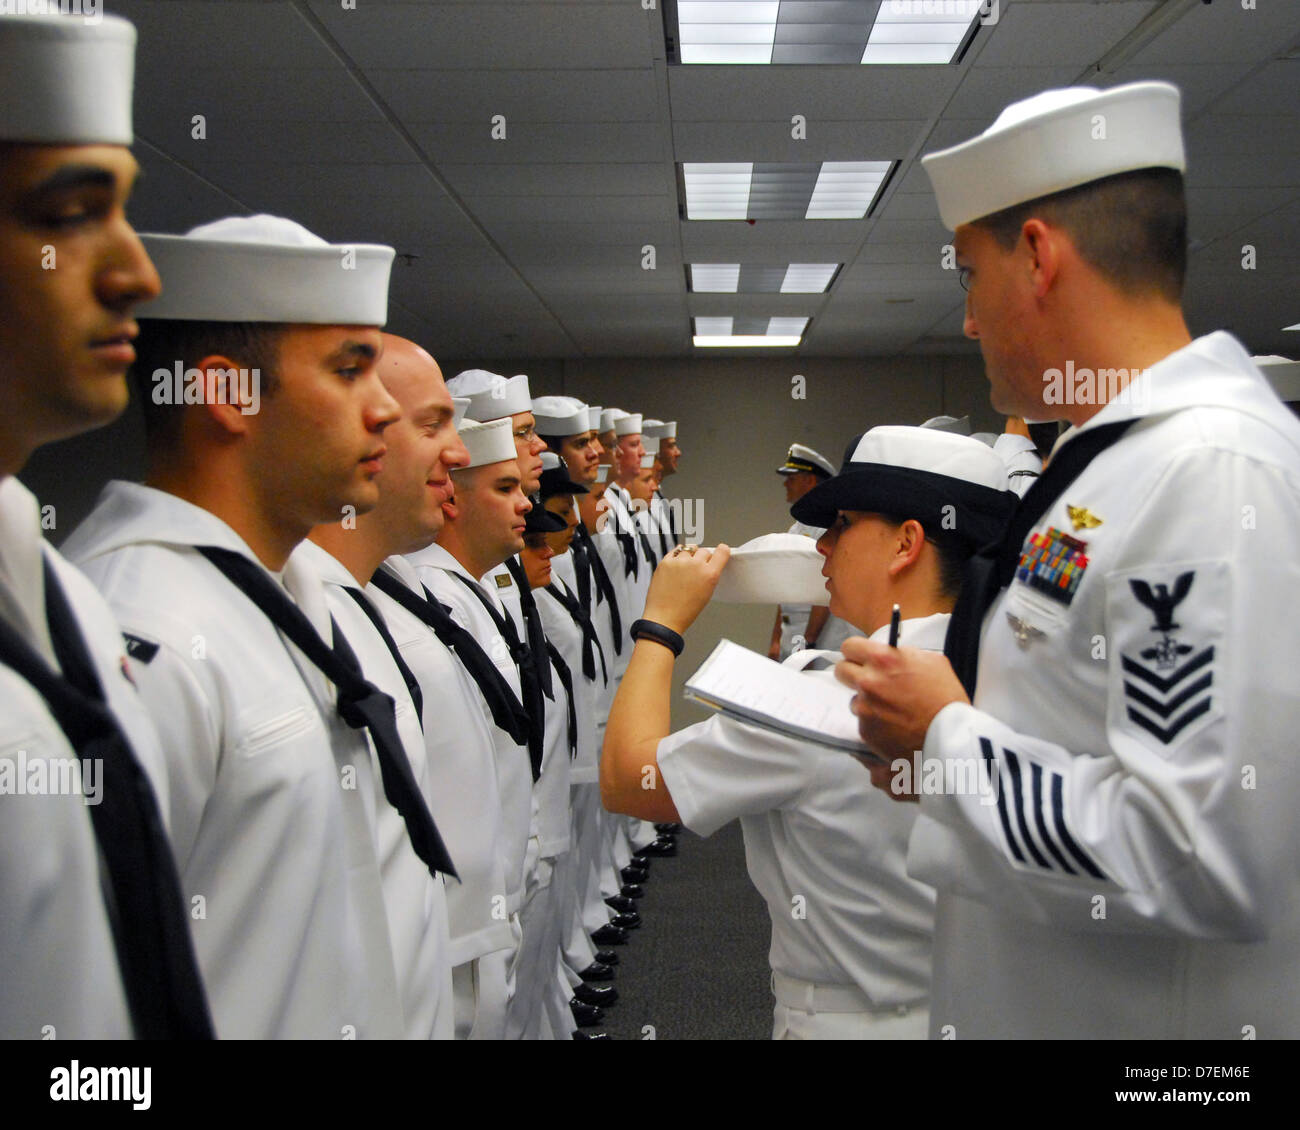 Sailors undergo a uniform inspection. Stock Photo